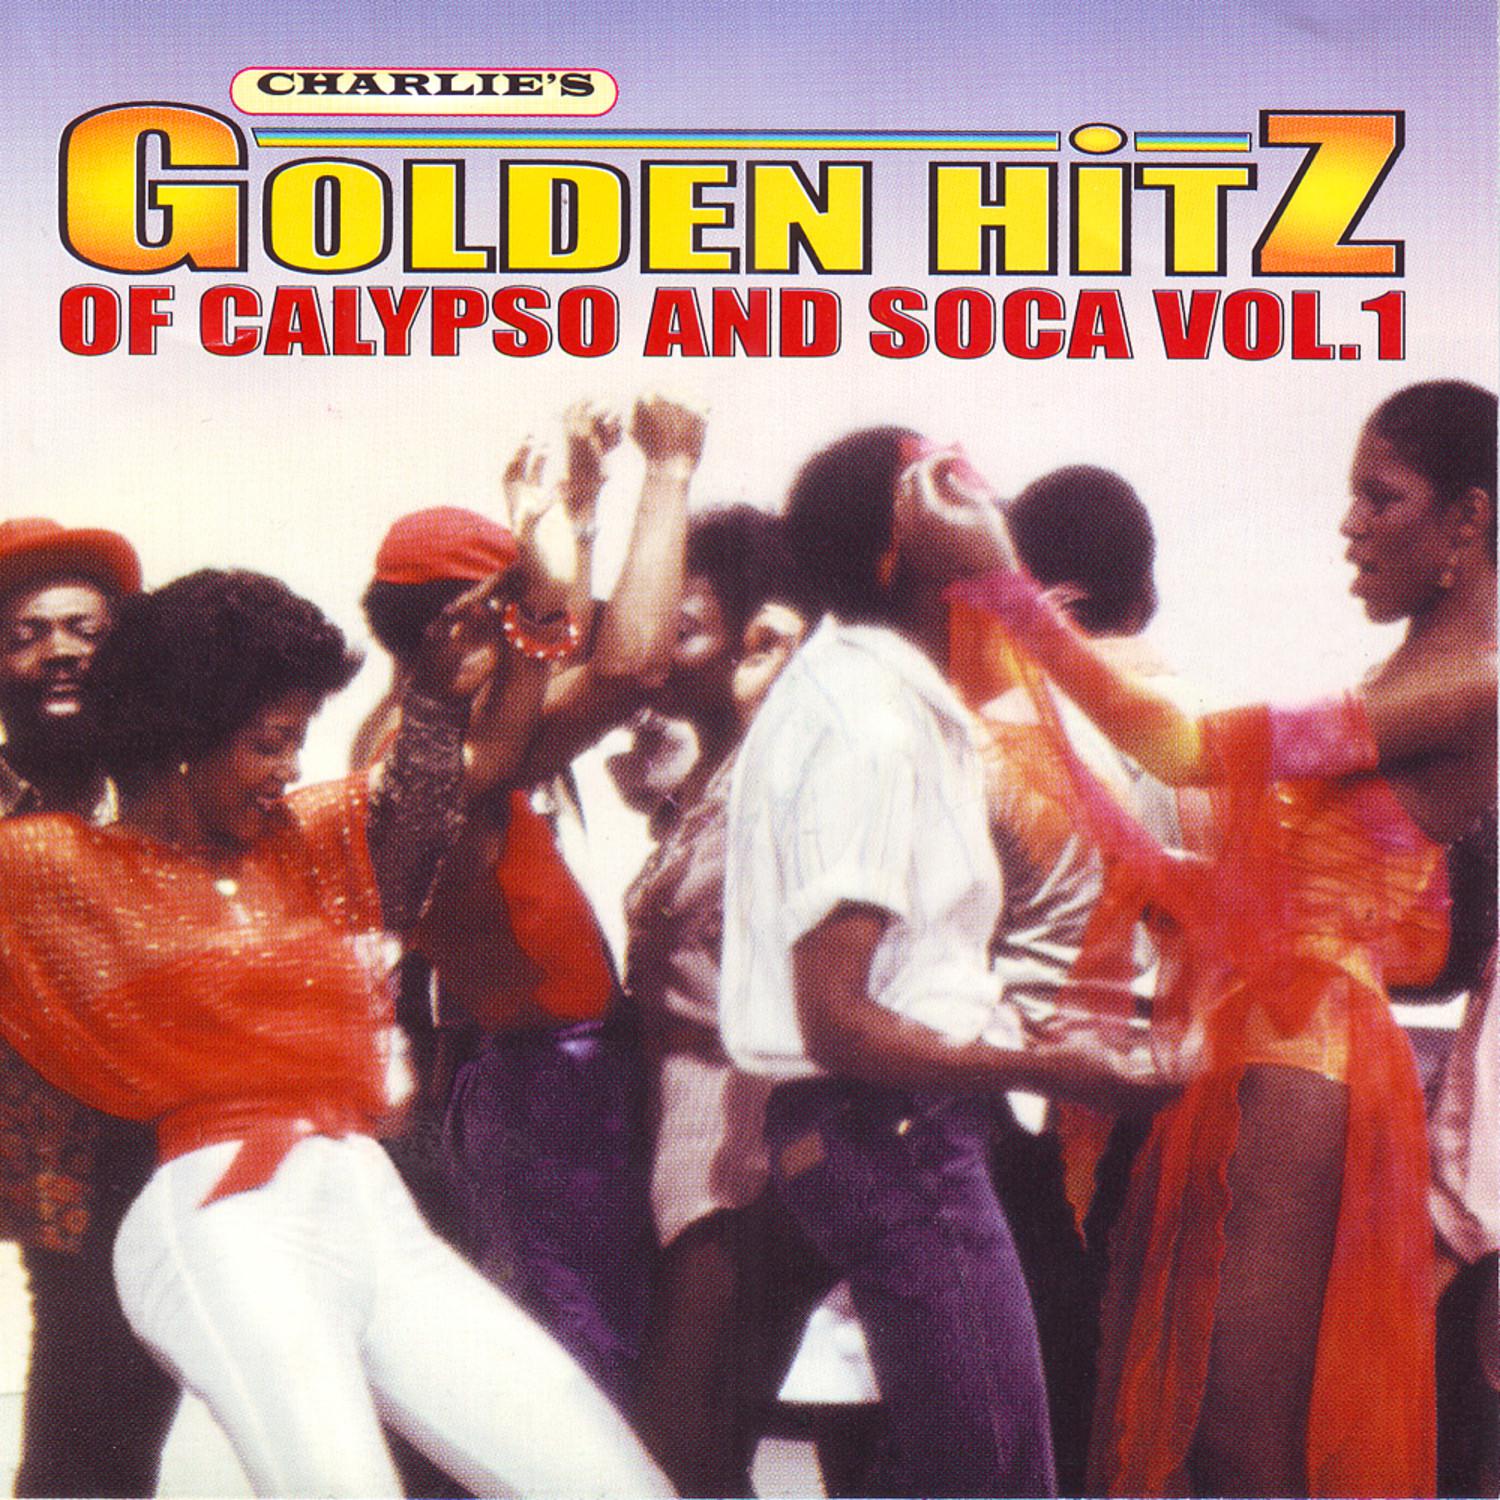 Golden Hitz Of Calypso And Soca Vol.1